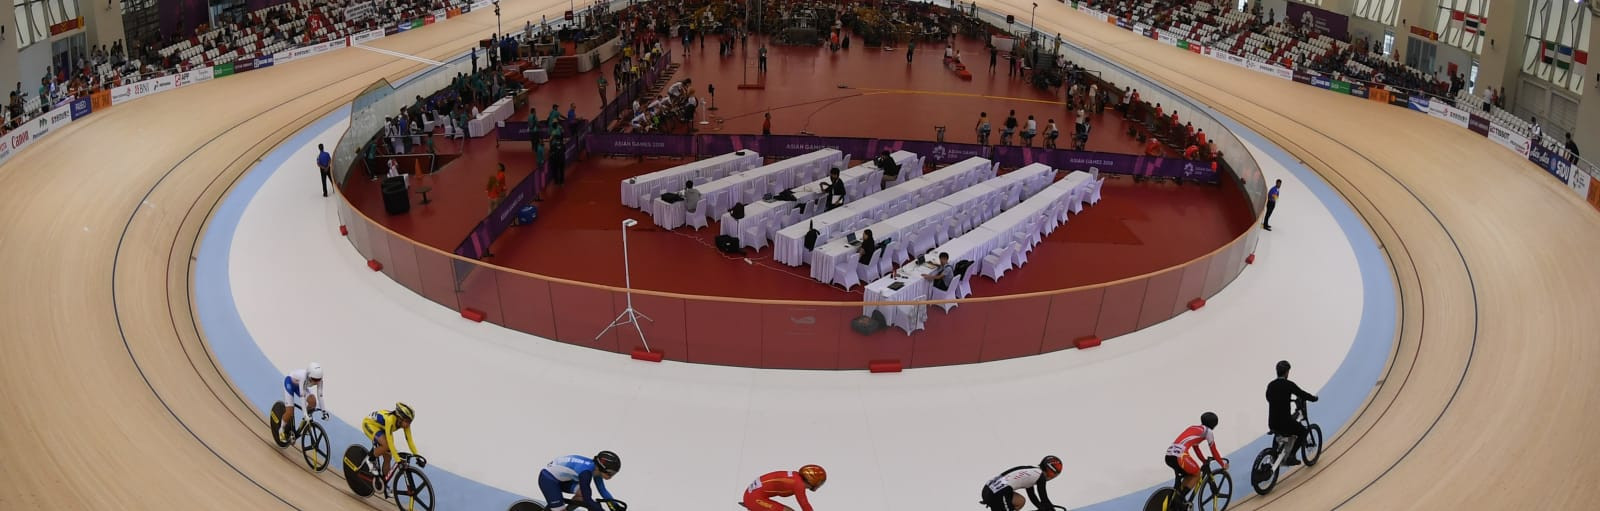 The Jakarta International Velodrome has won praise from the International Cycling Union ©Asian Games 2018